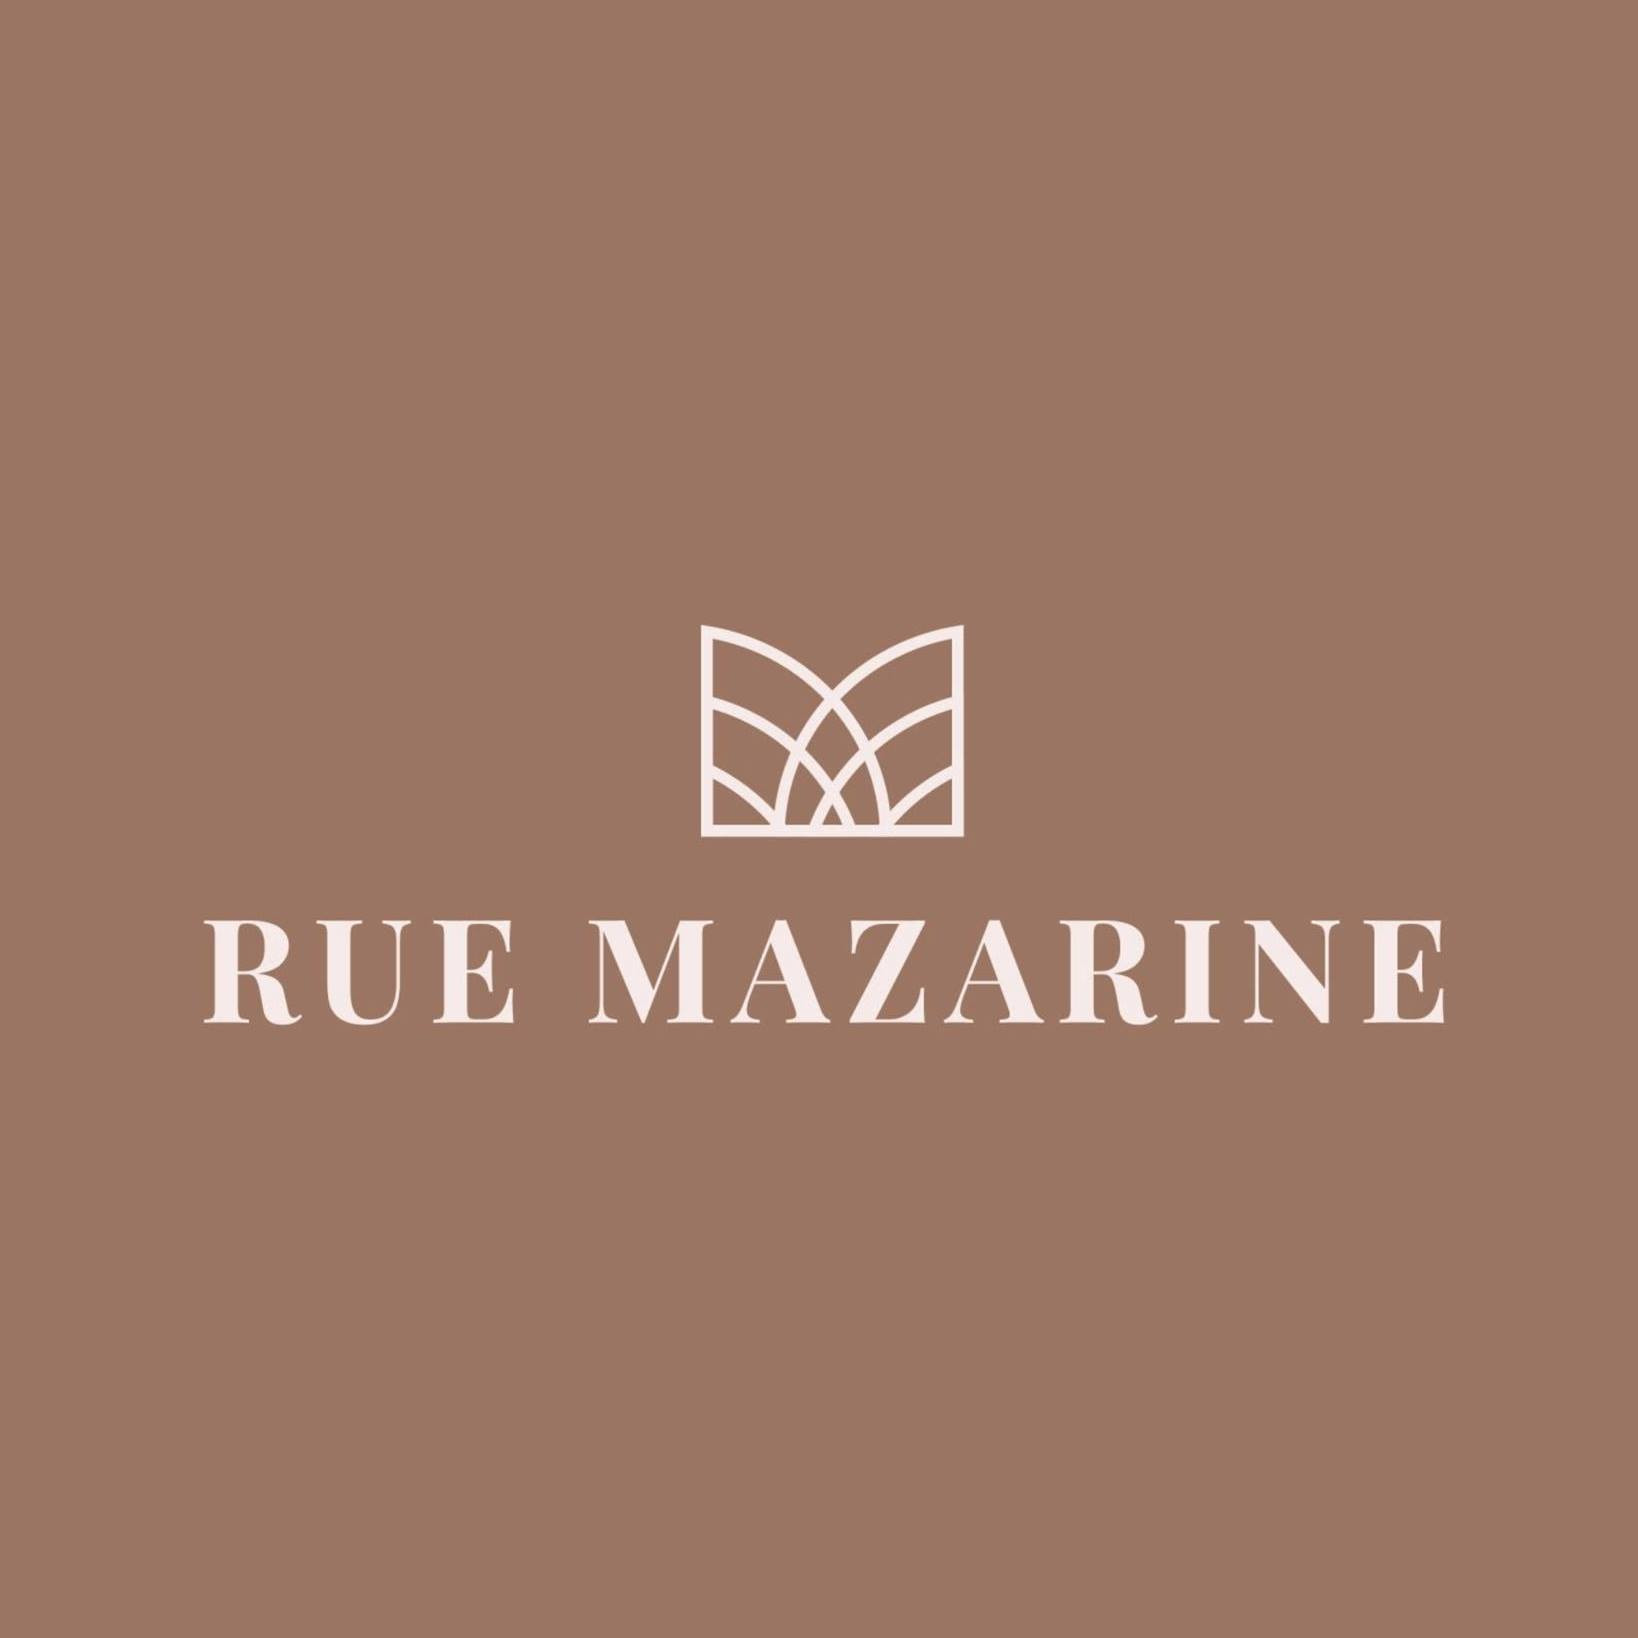 Rue Mazarine